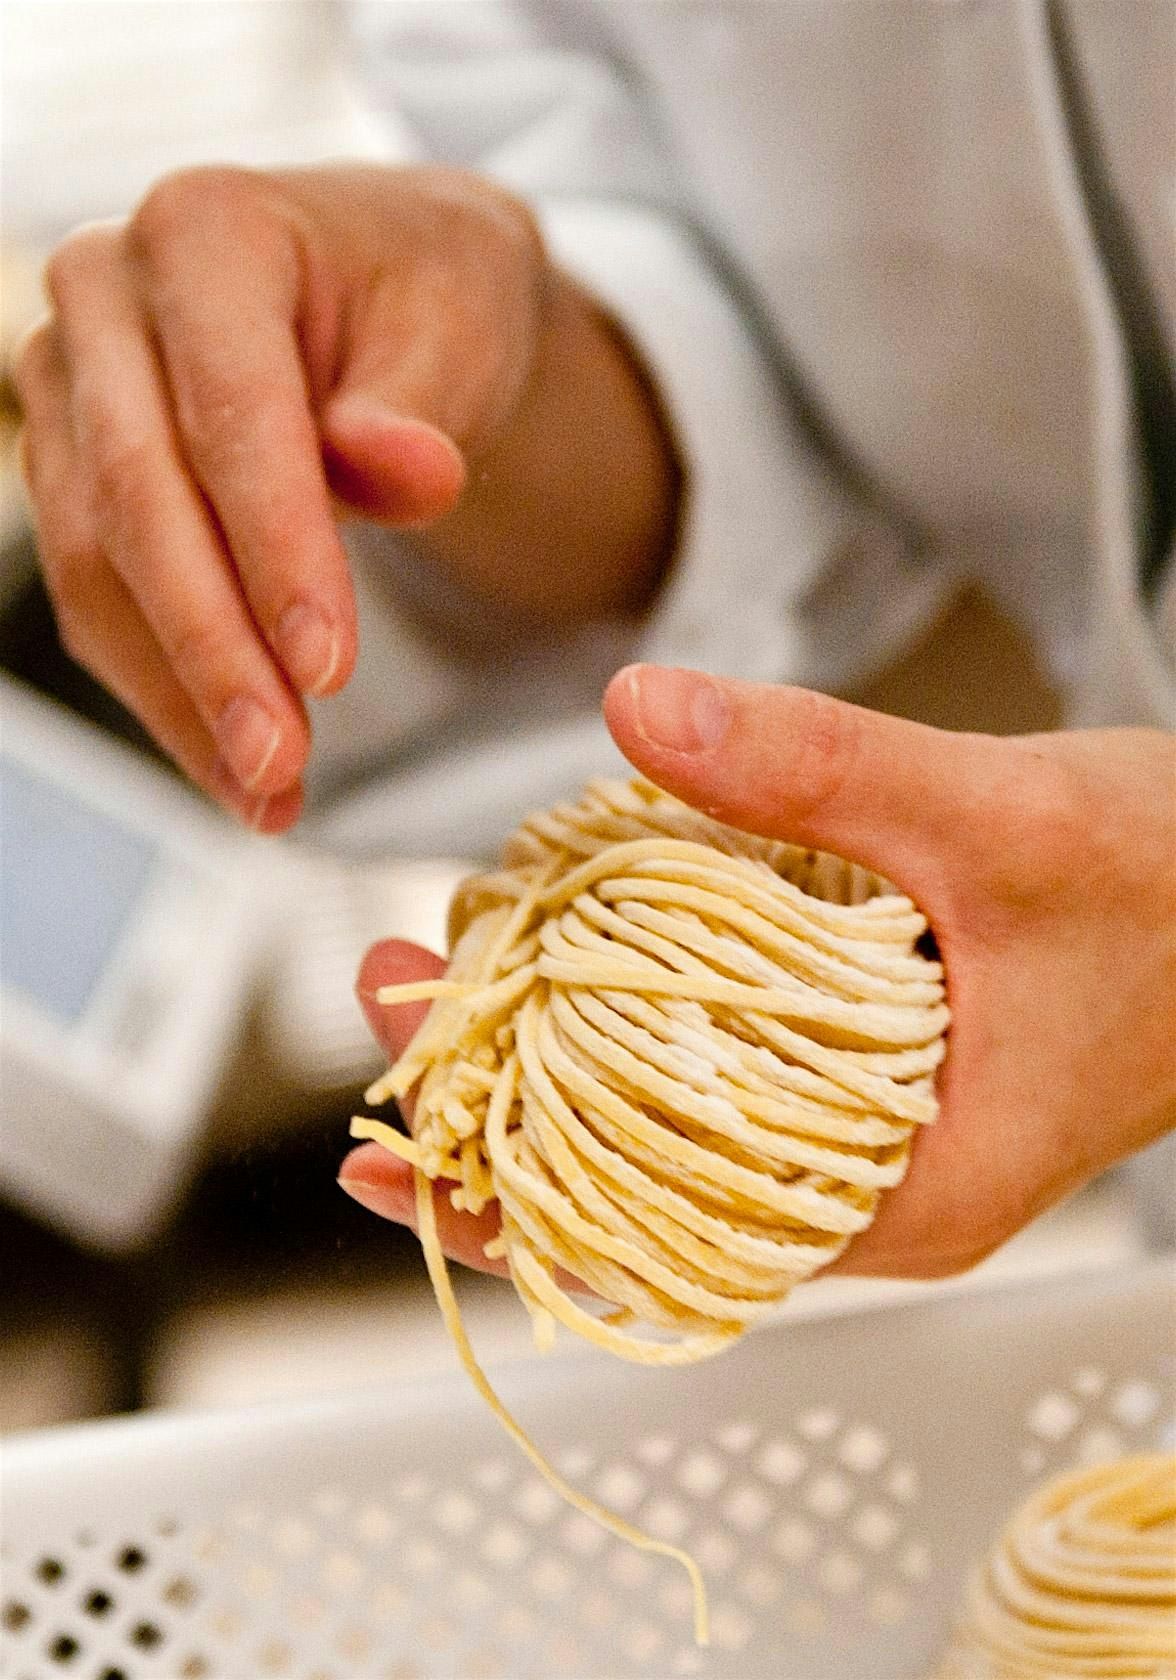 Hands-On Fresh Pasta-Making 101 Workshop at 3:00pm